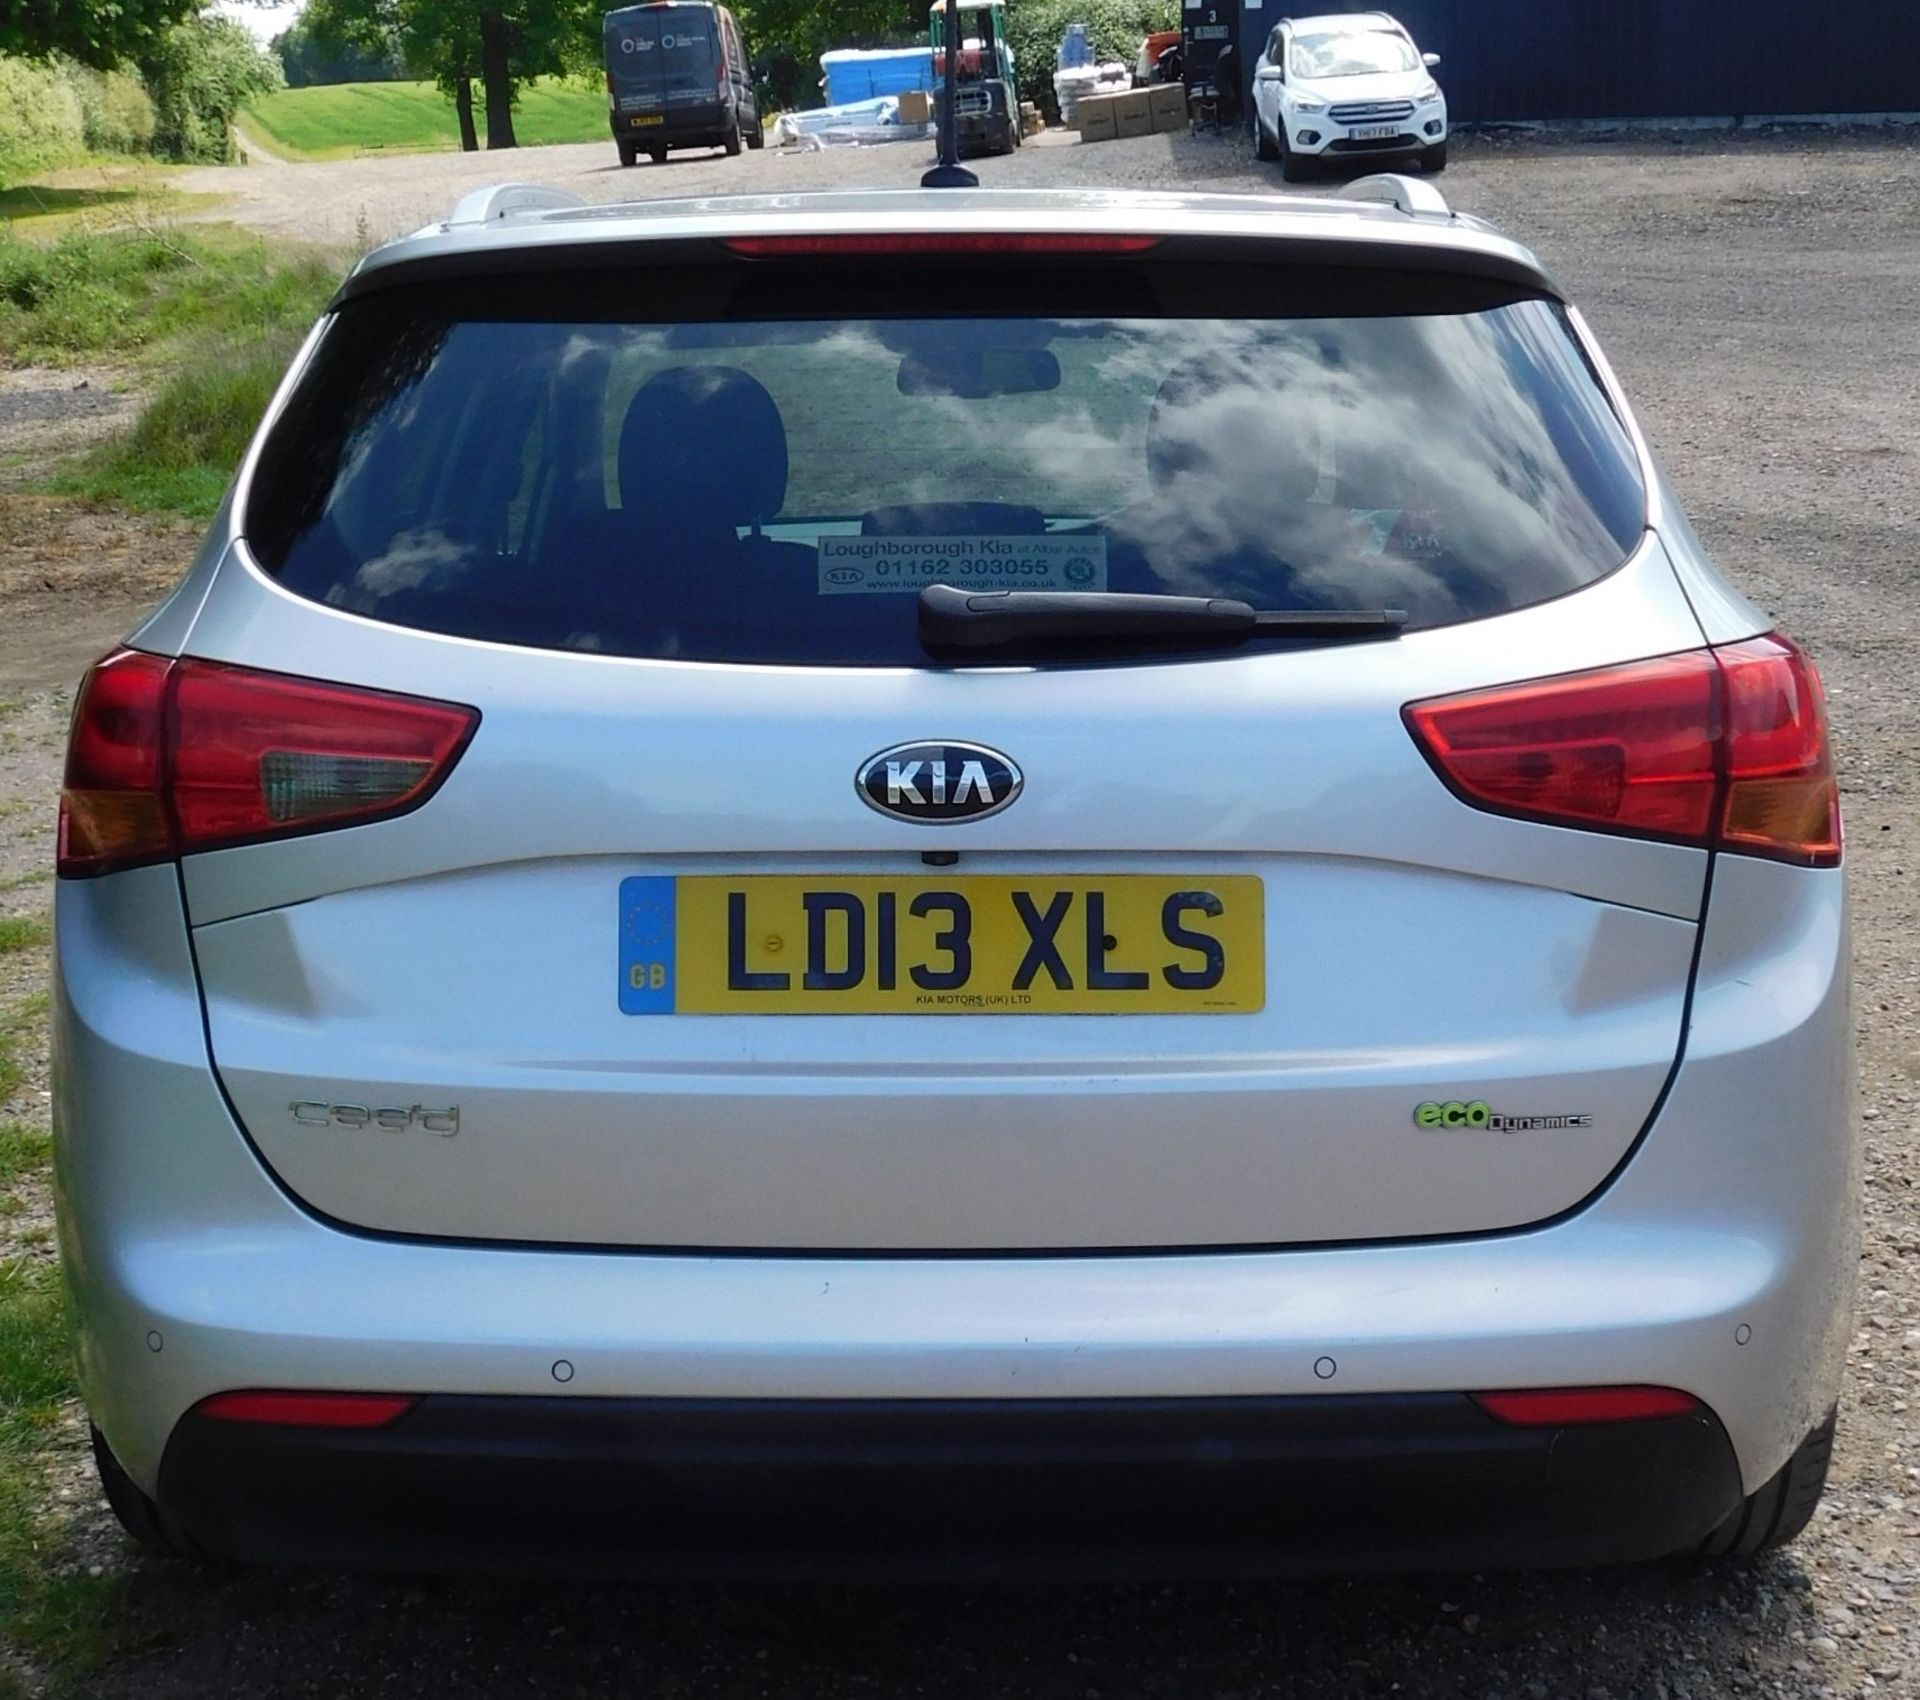 Kia Ceed Sportswagon, 1.6 CRDi 3 5dr, Registration LD13 XLS, First Registered 4th June 2013, MOT - Image 5 of 28